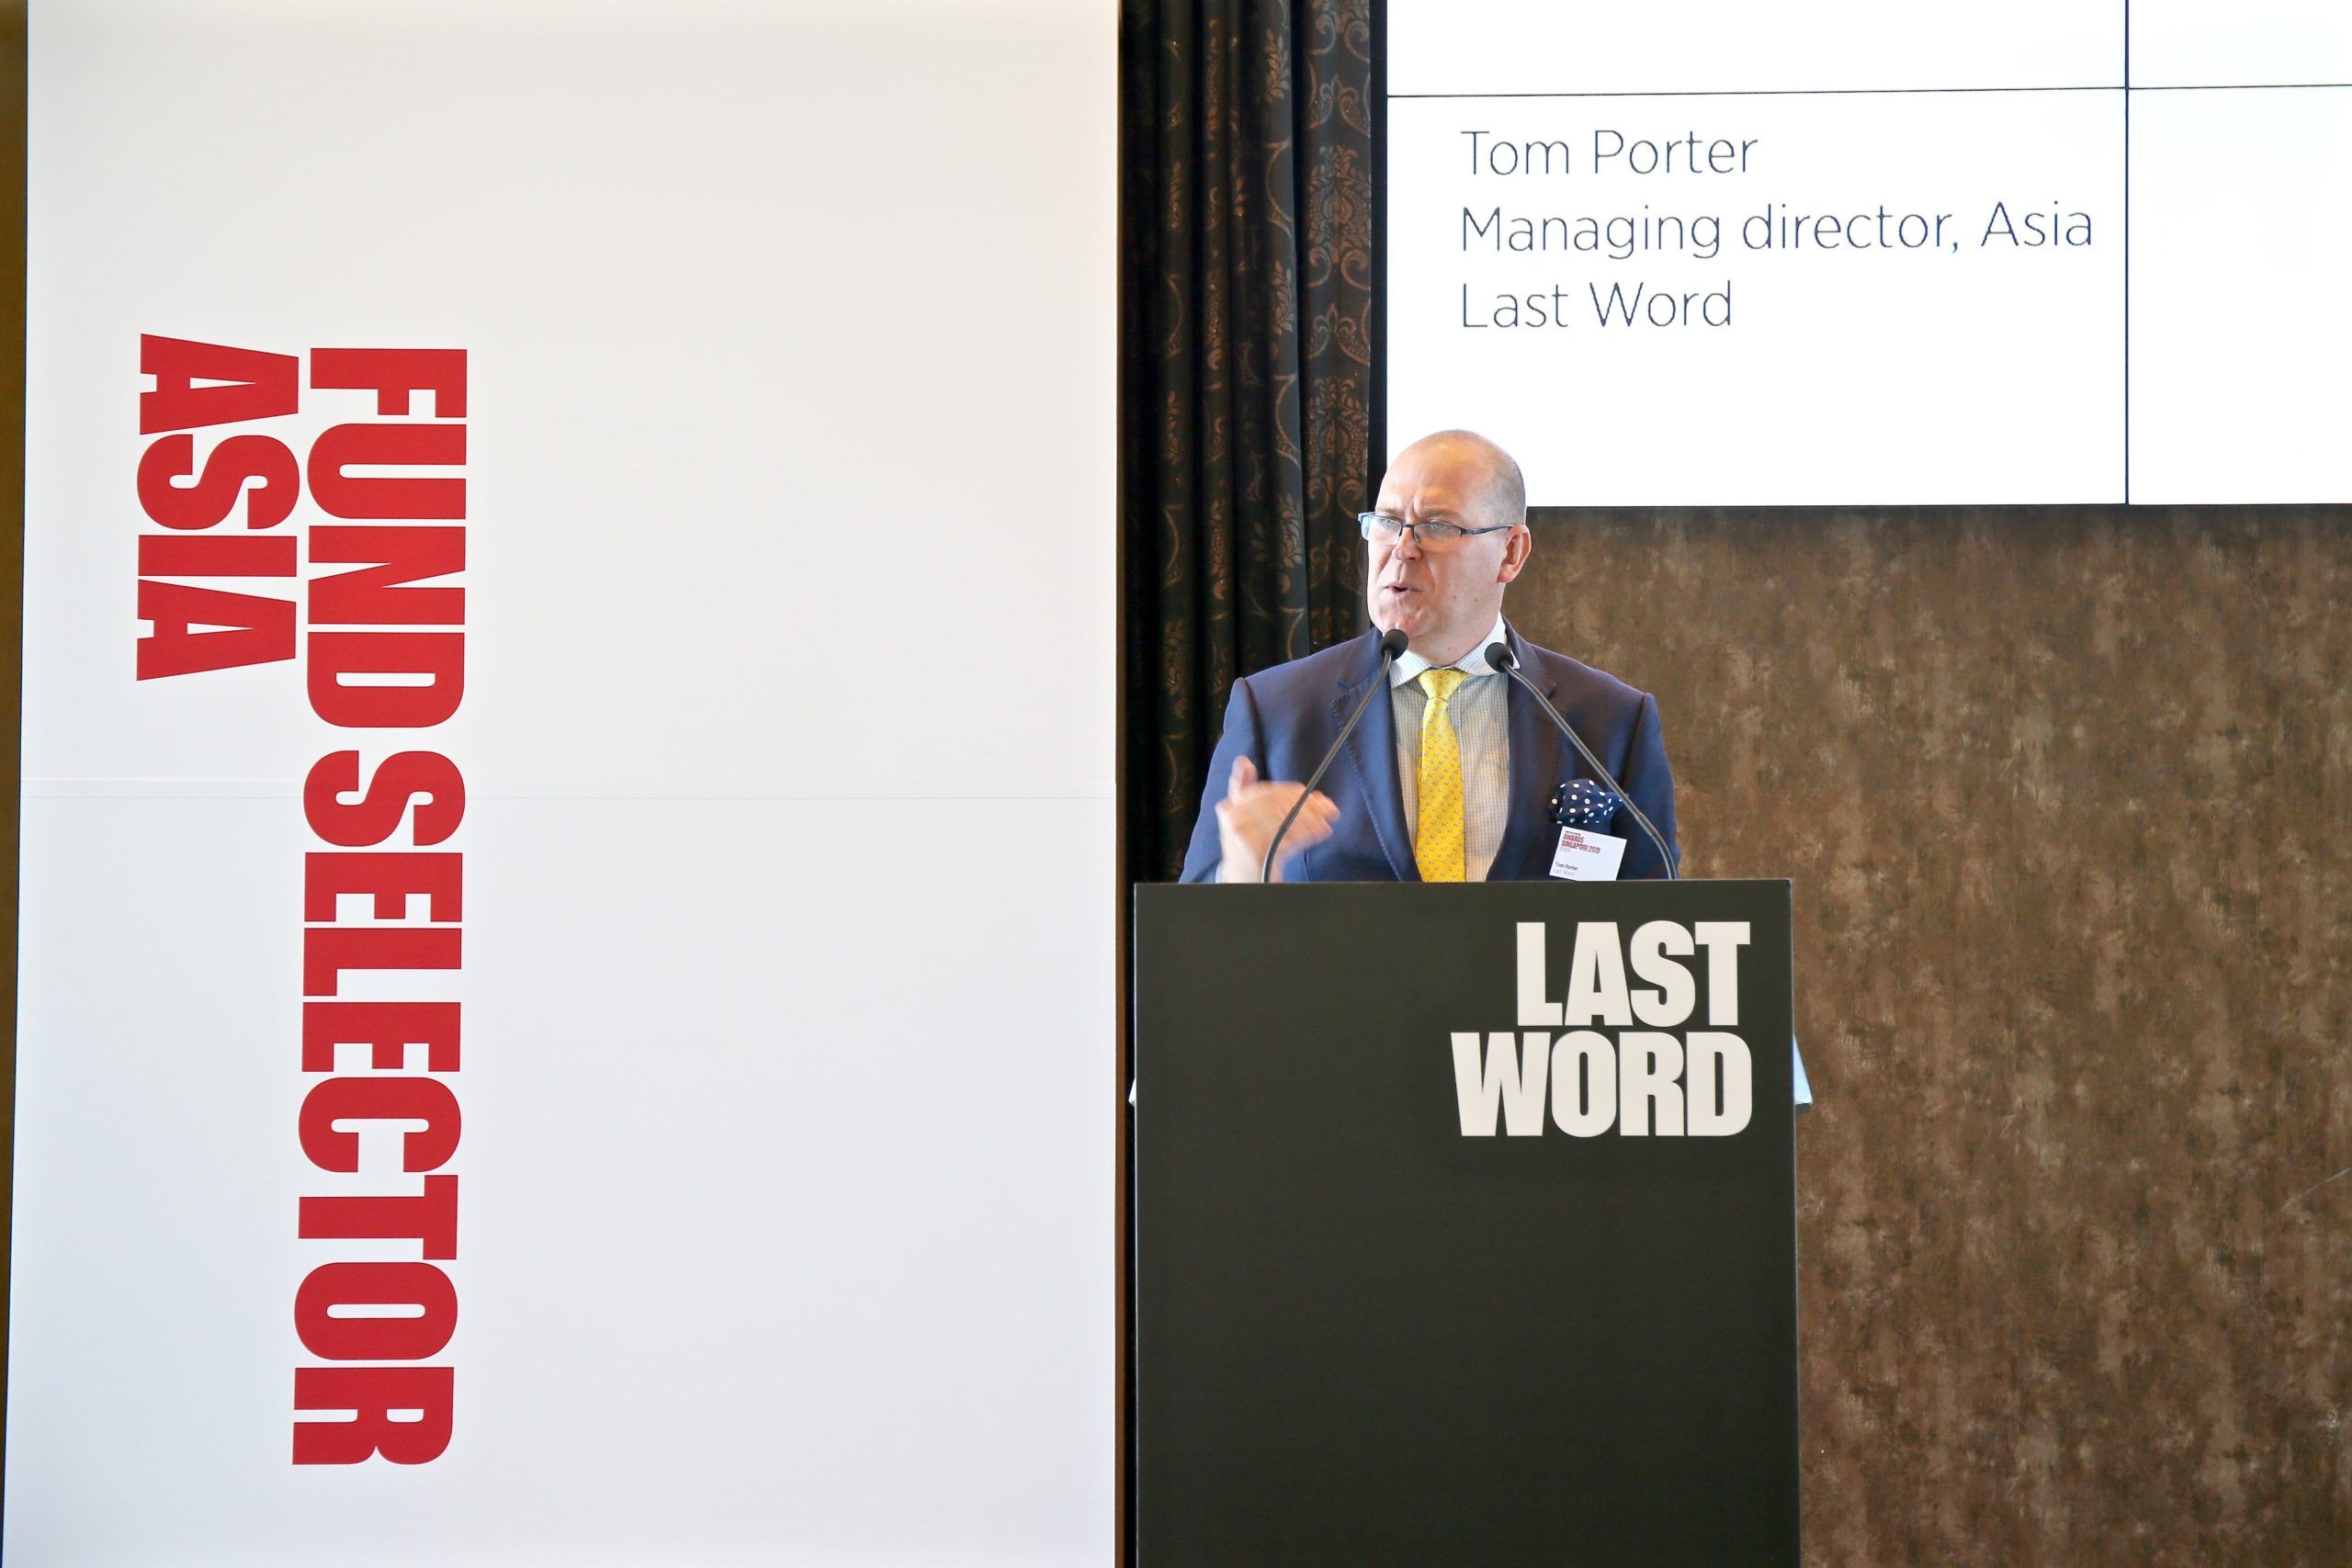 Tom Porter, Managing Director, Last Word Asia